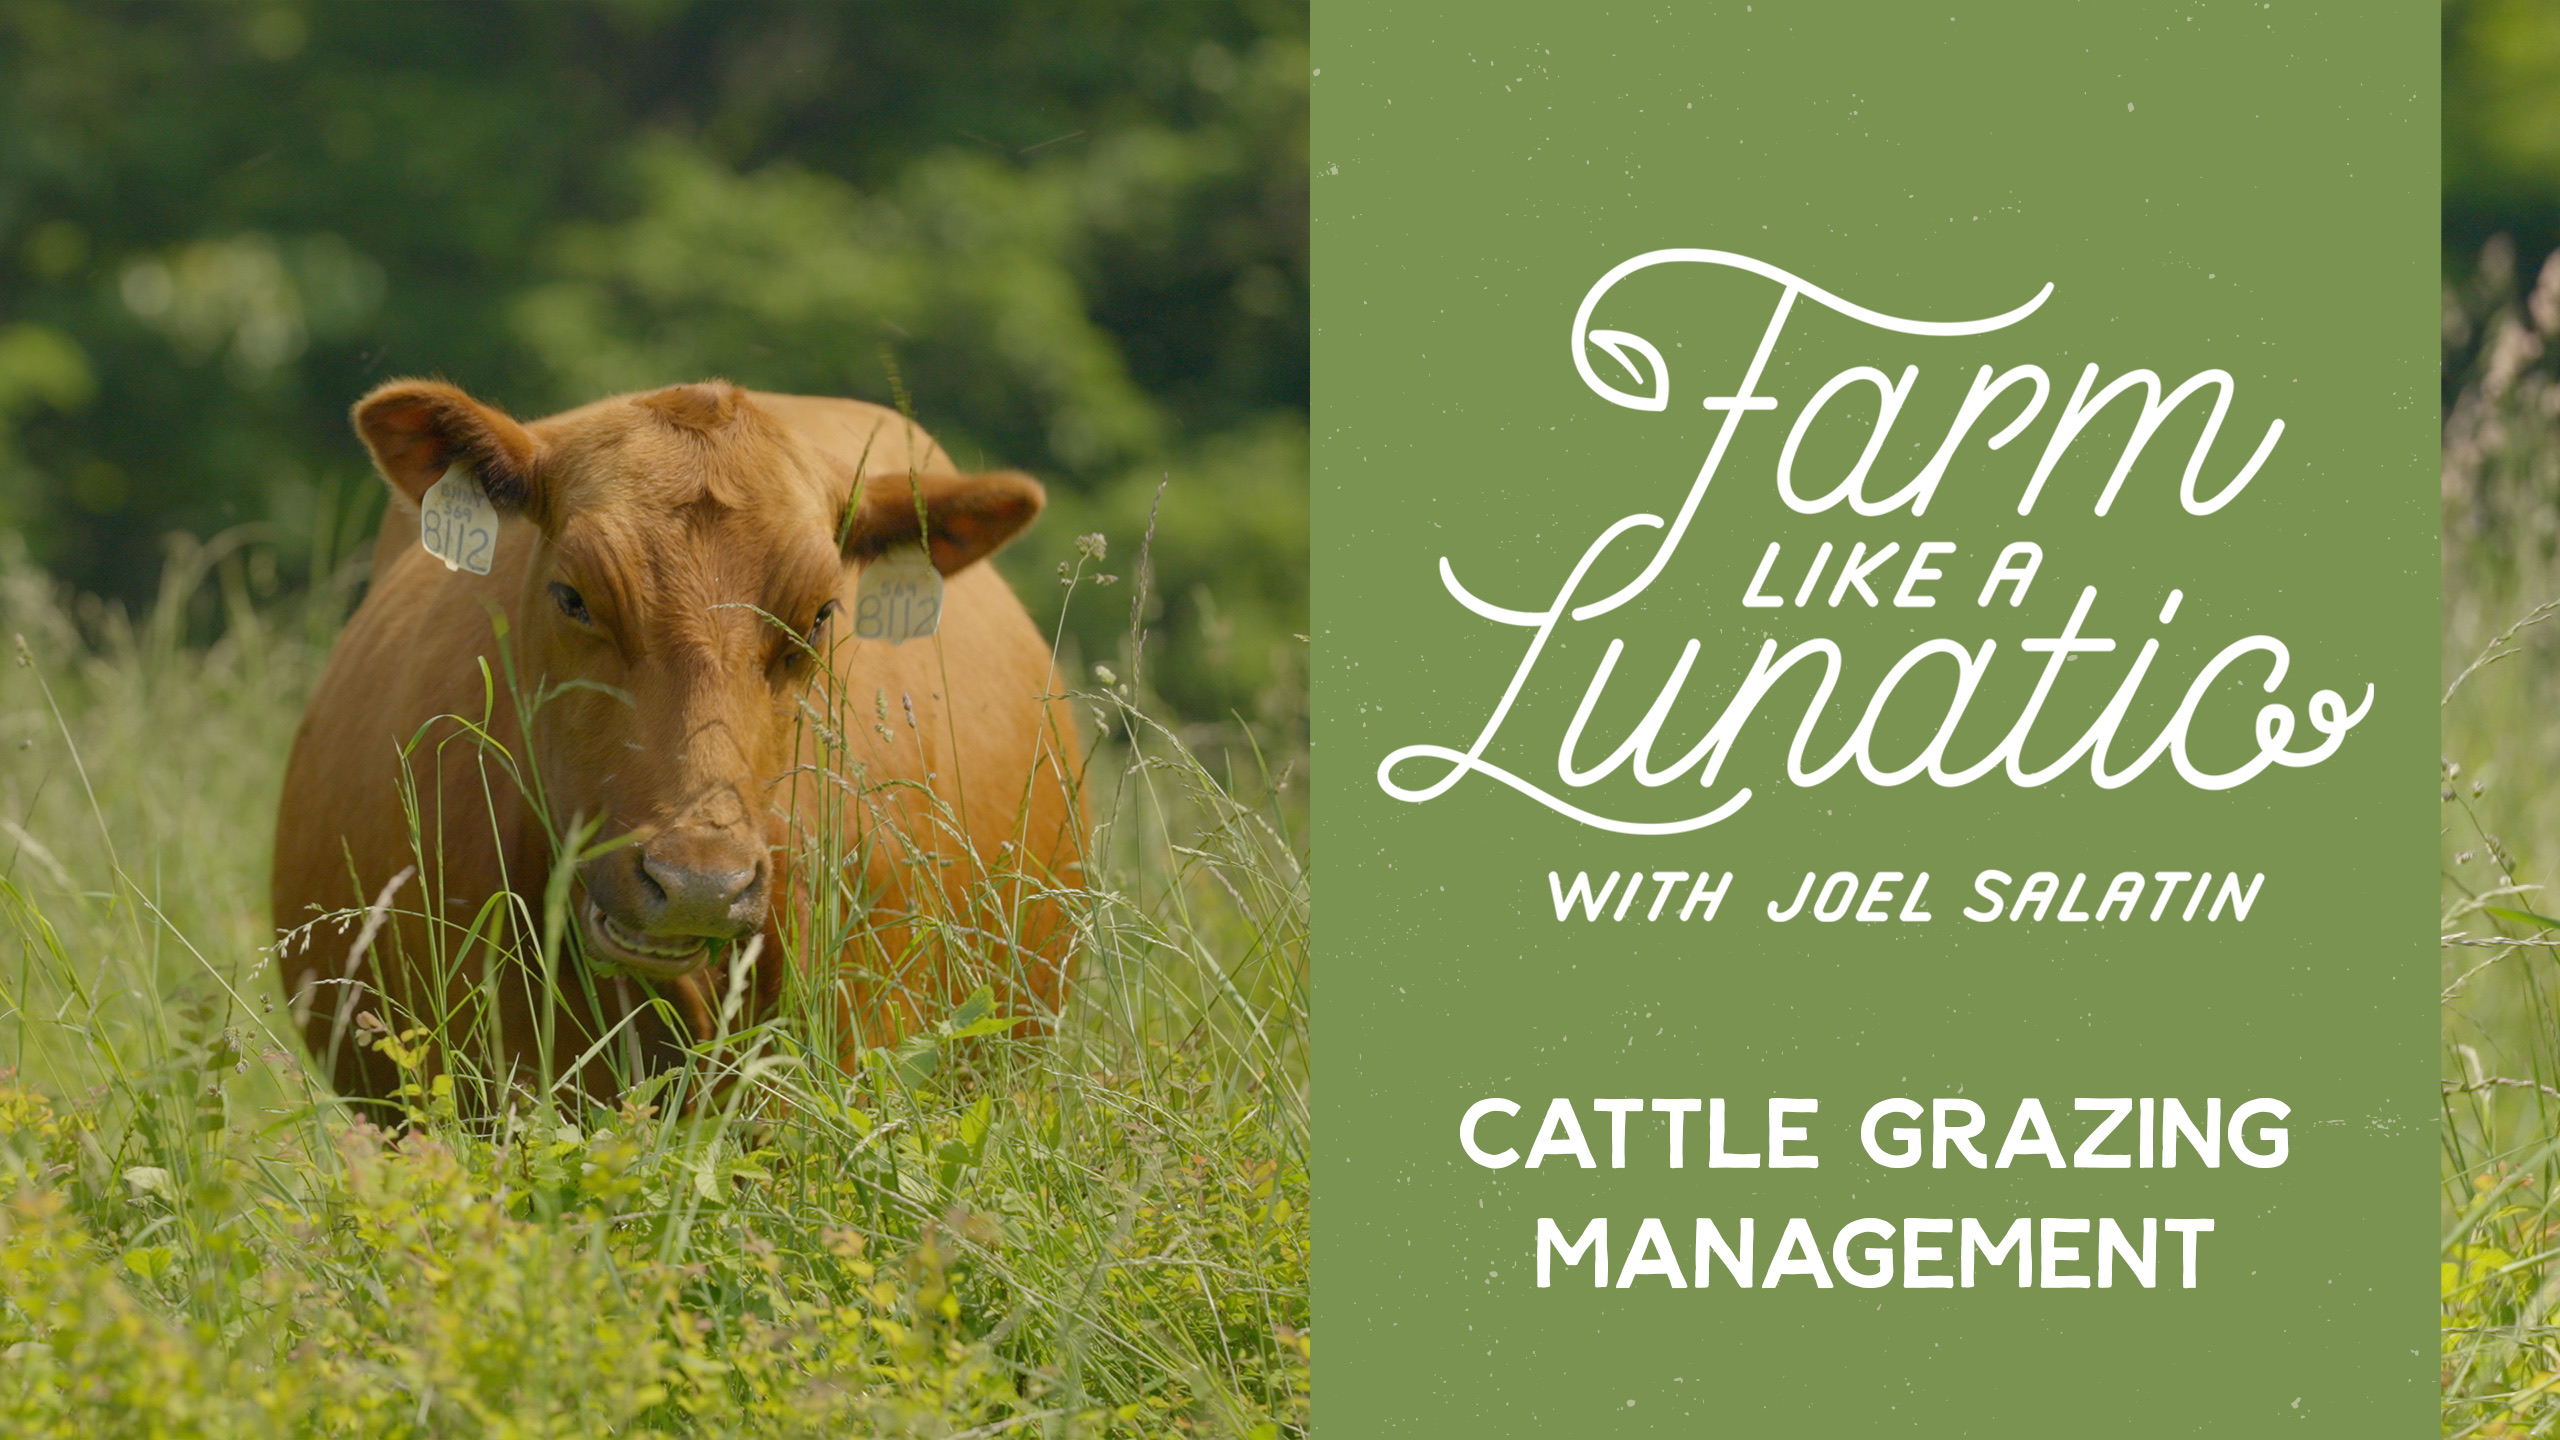 Cattle Grazing Management